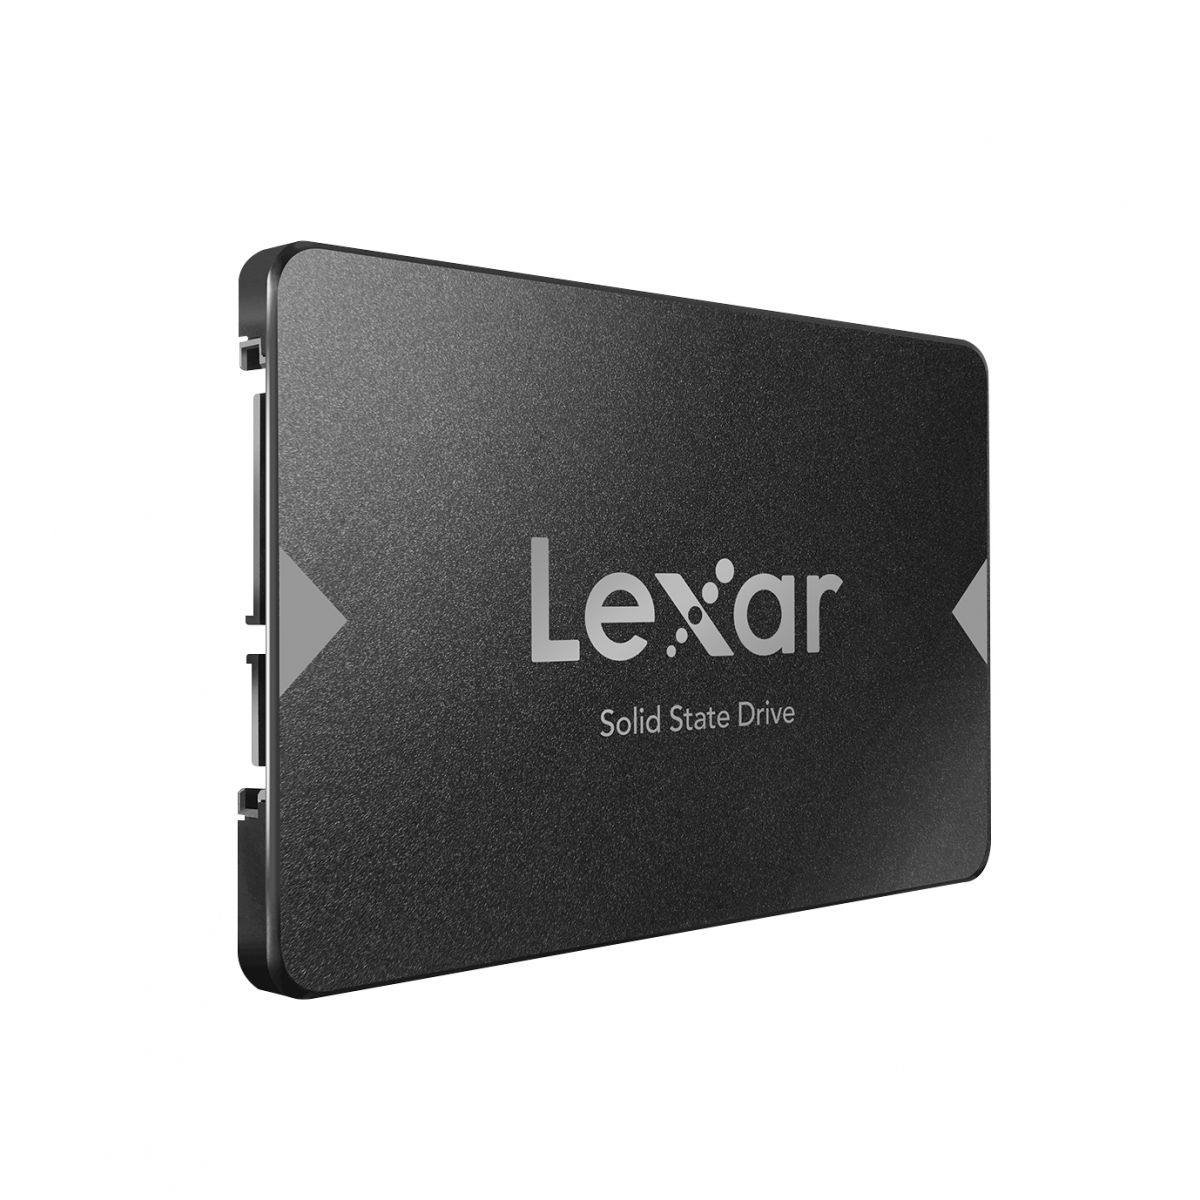 SSD Lexar NS100 240GB 2.5-Inch SATA III